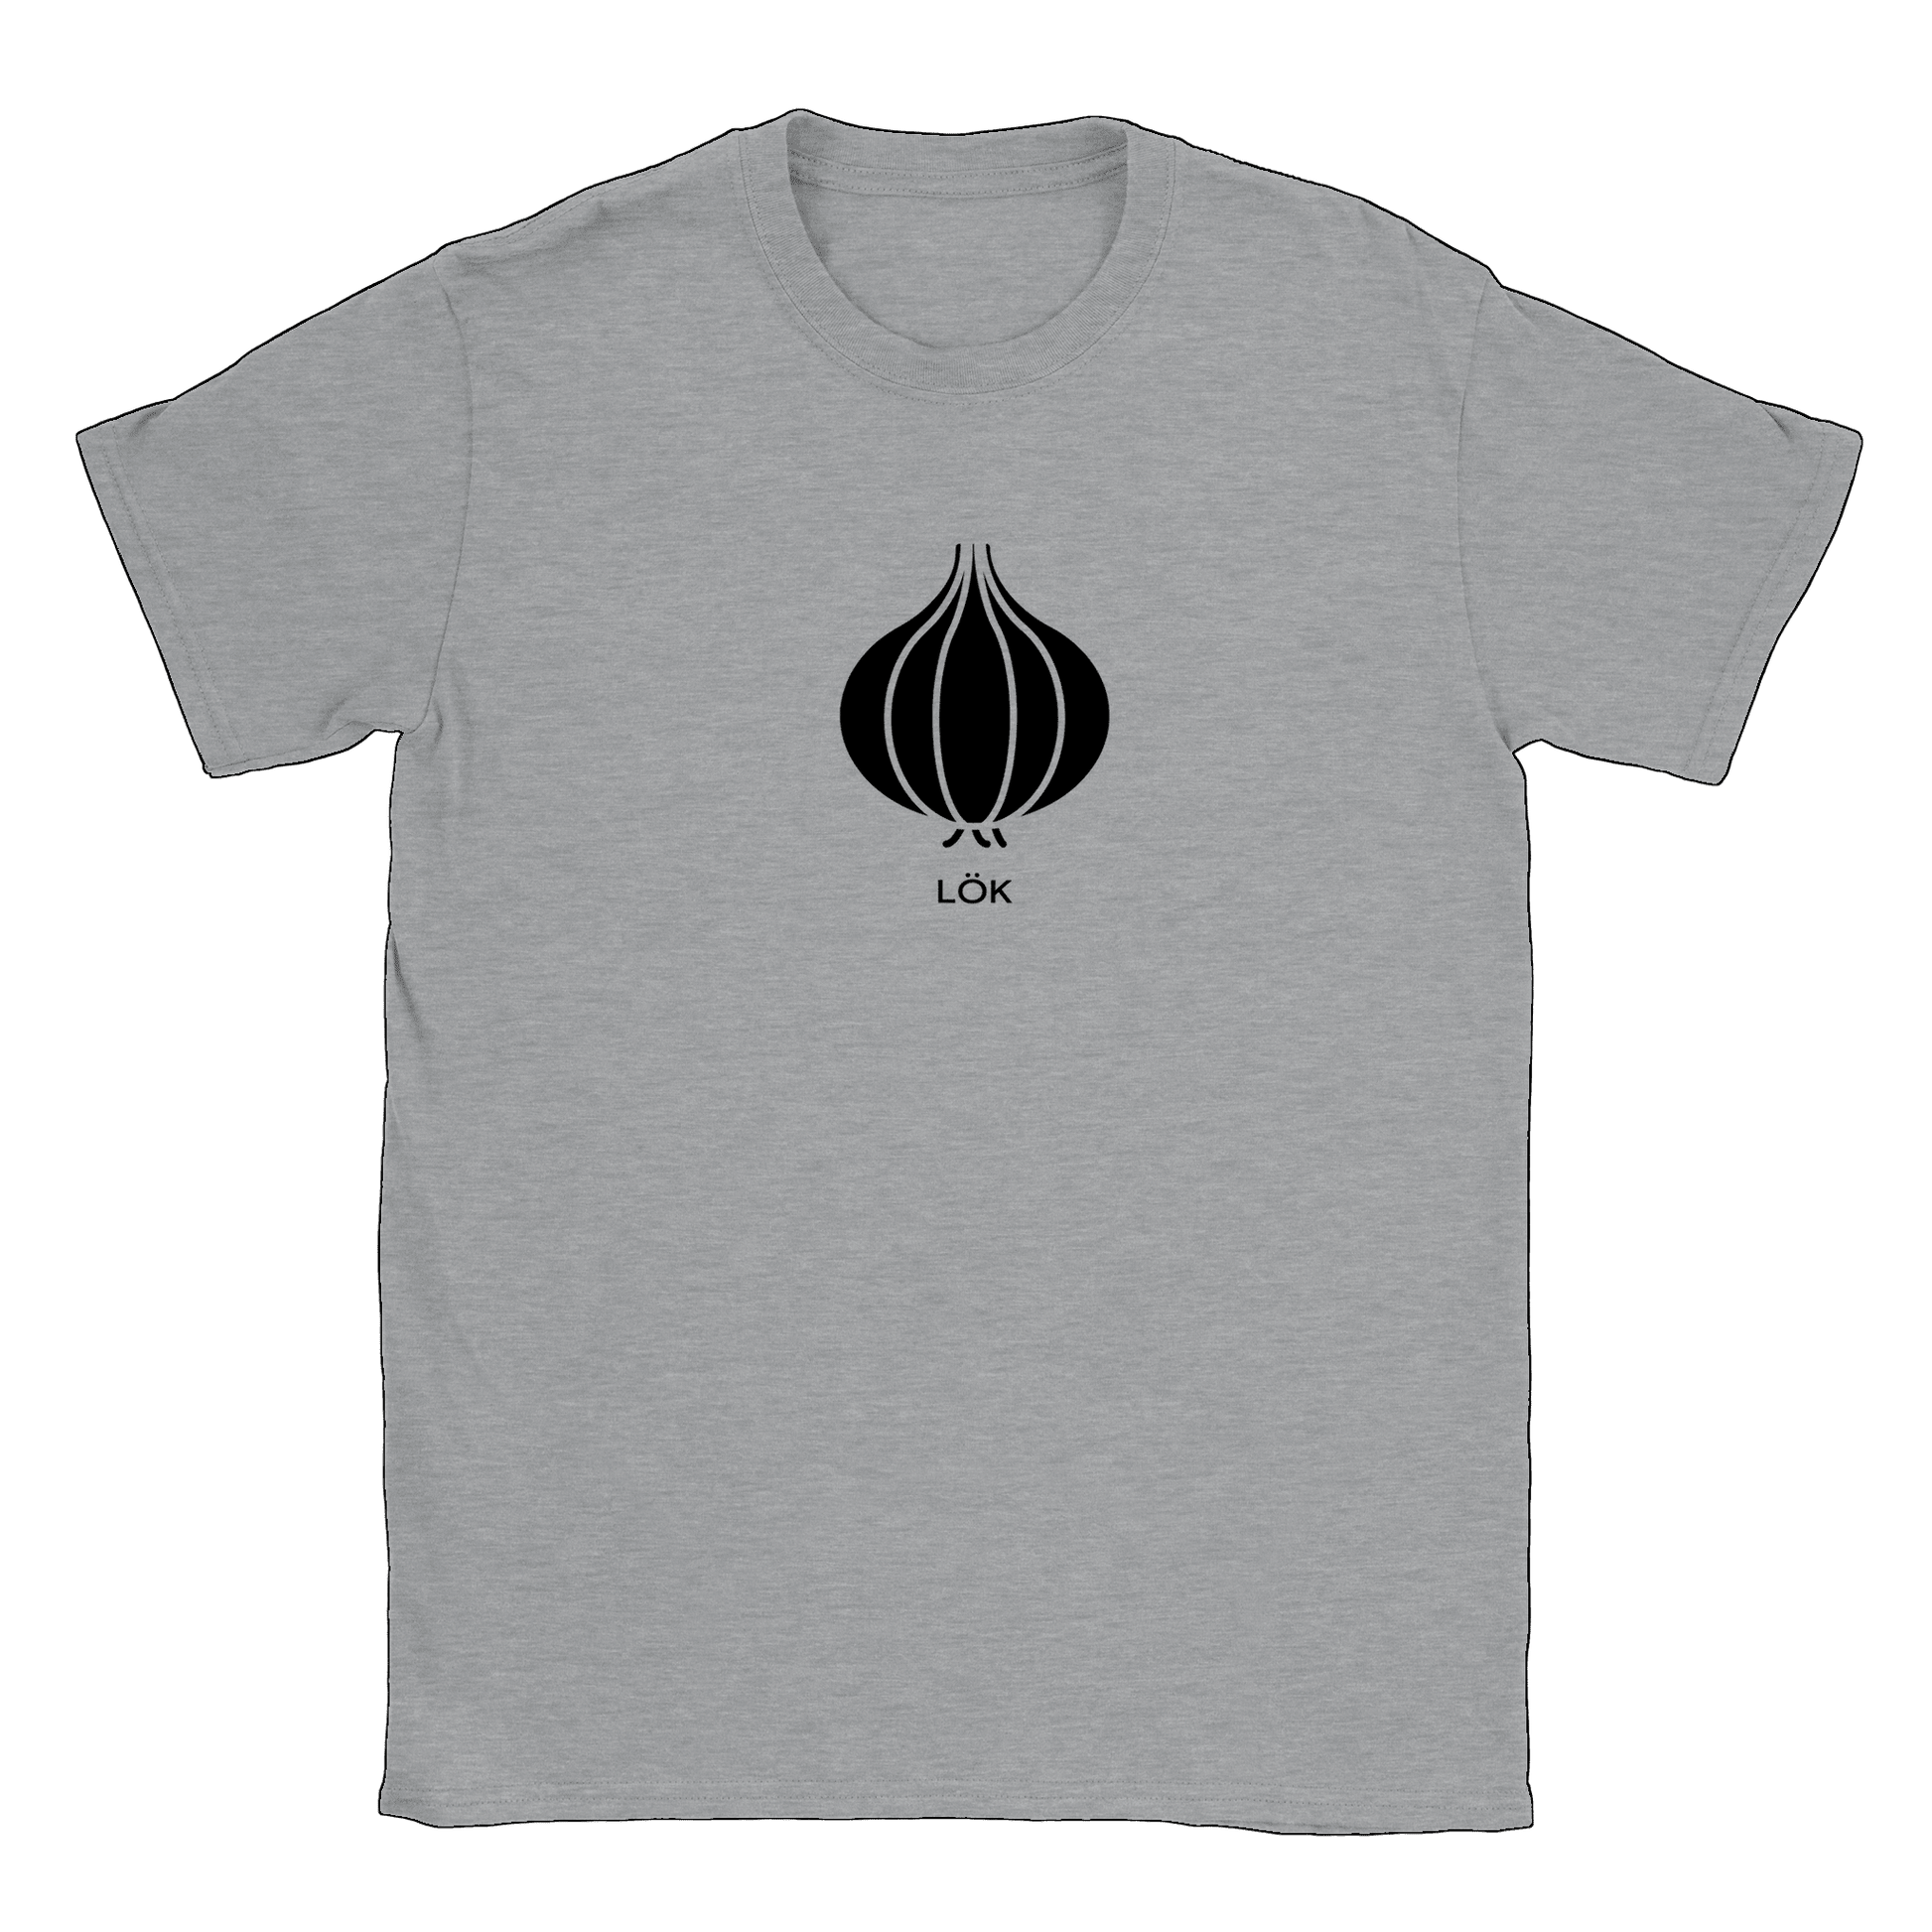 Lök - T-shirt Sports Grey